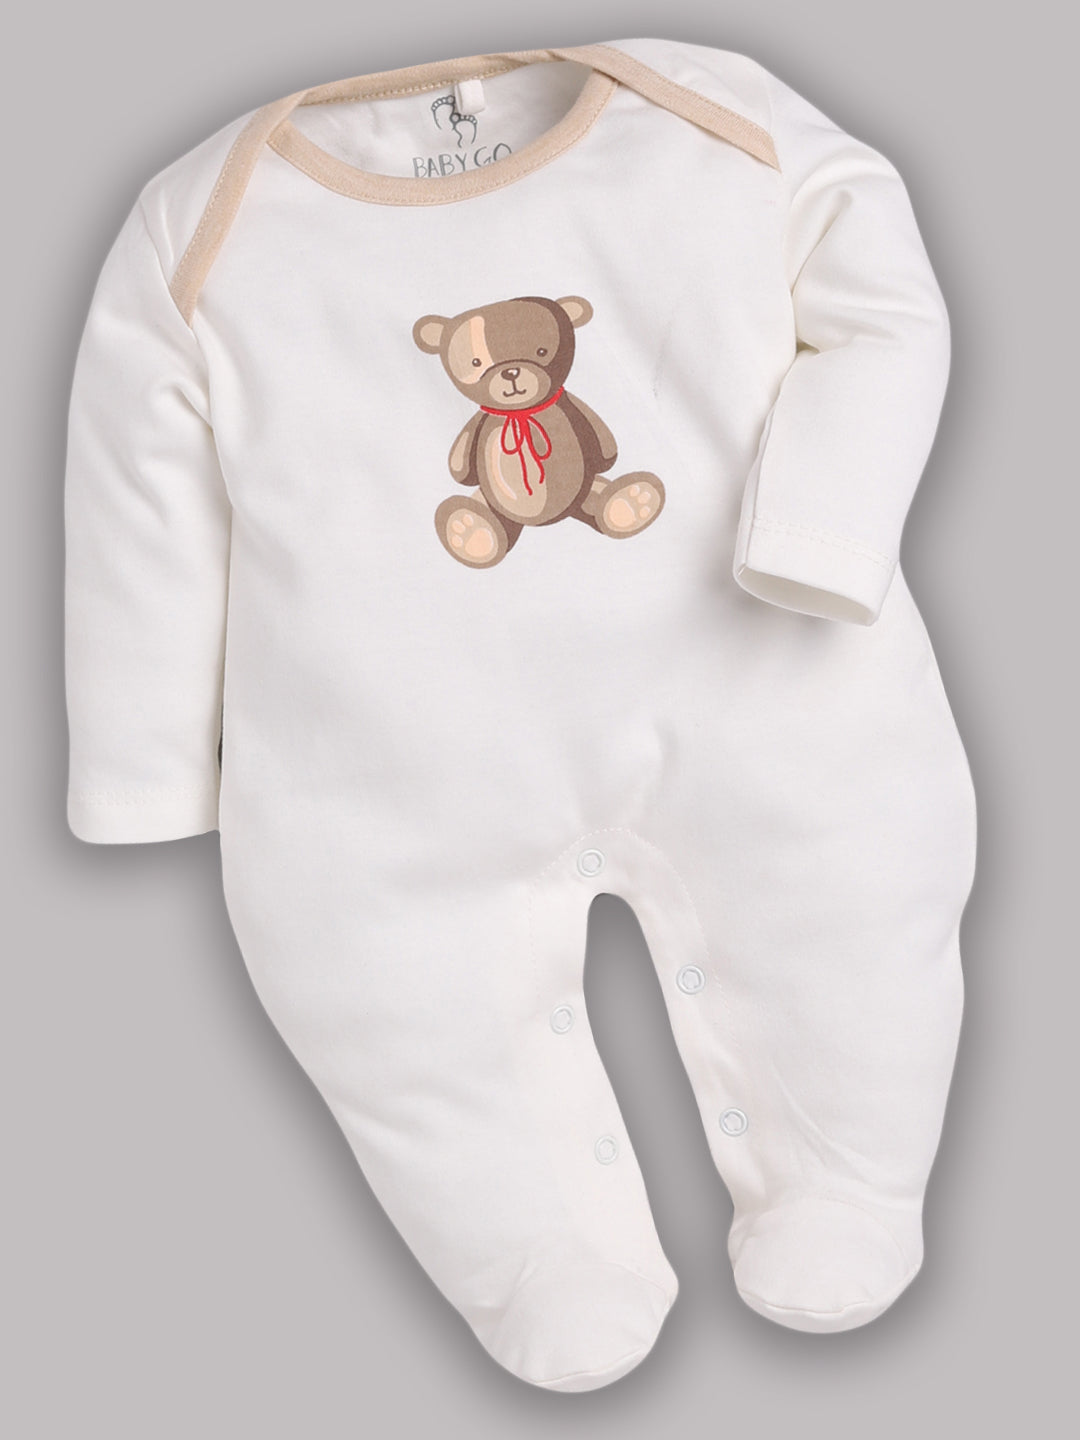 BABY GO Full Sleeve Romper For Baby Boys(0-3M,BROWN)